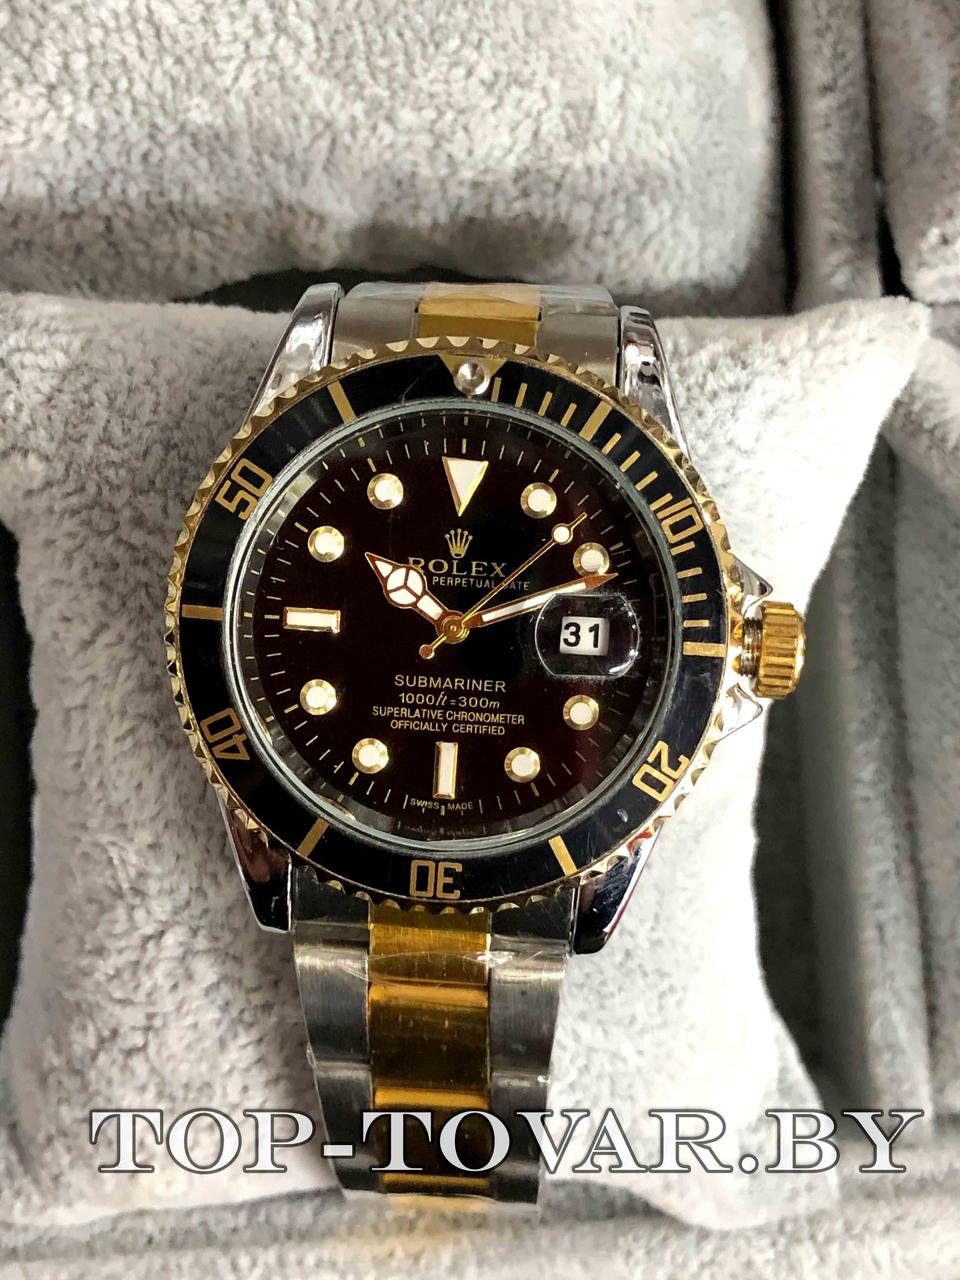 Часы Rolex RX-1534